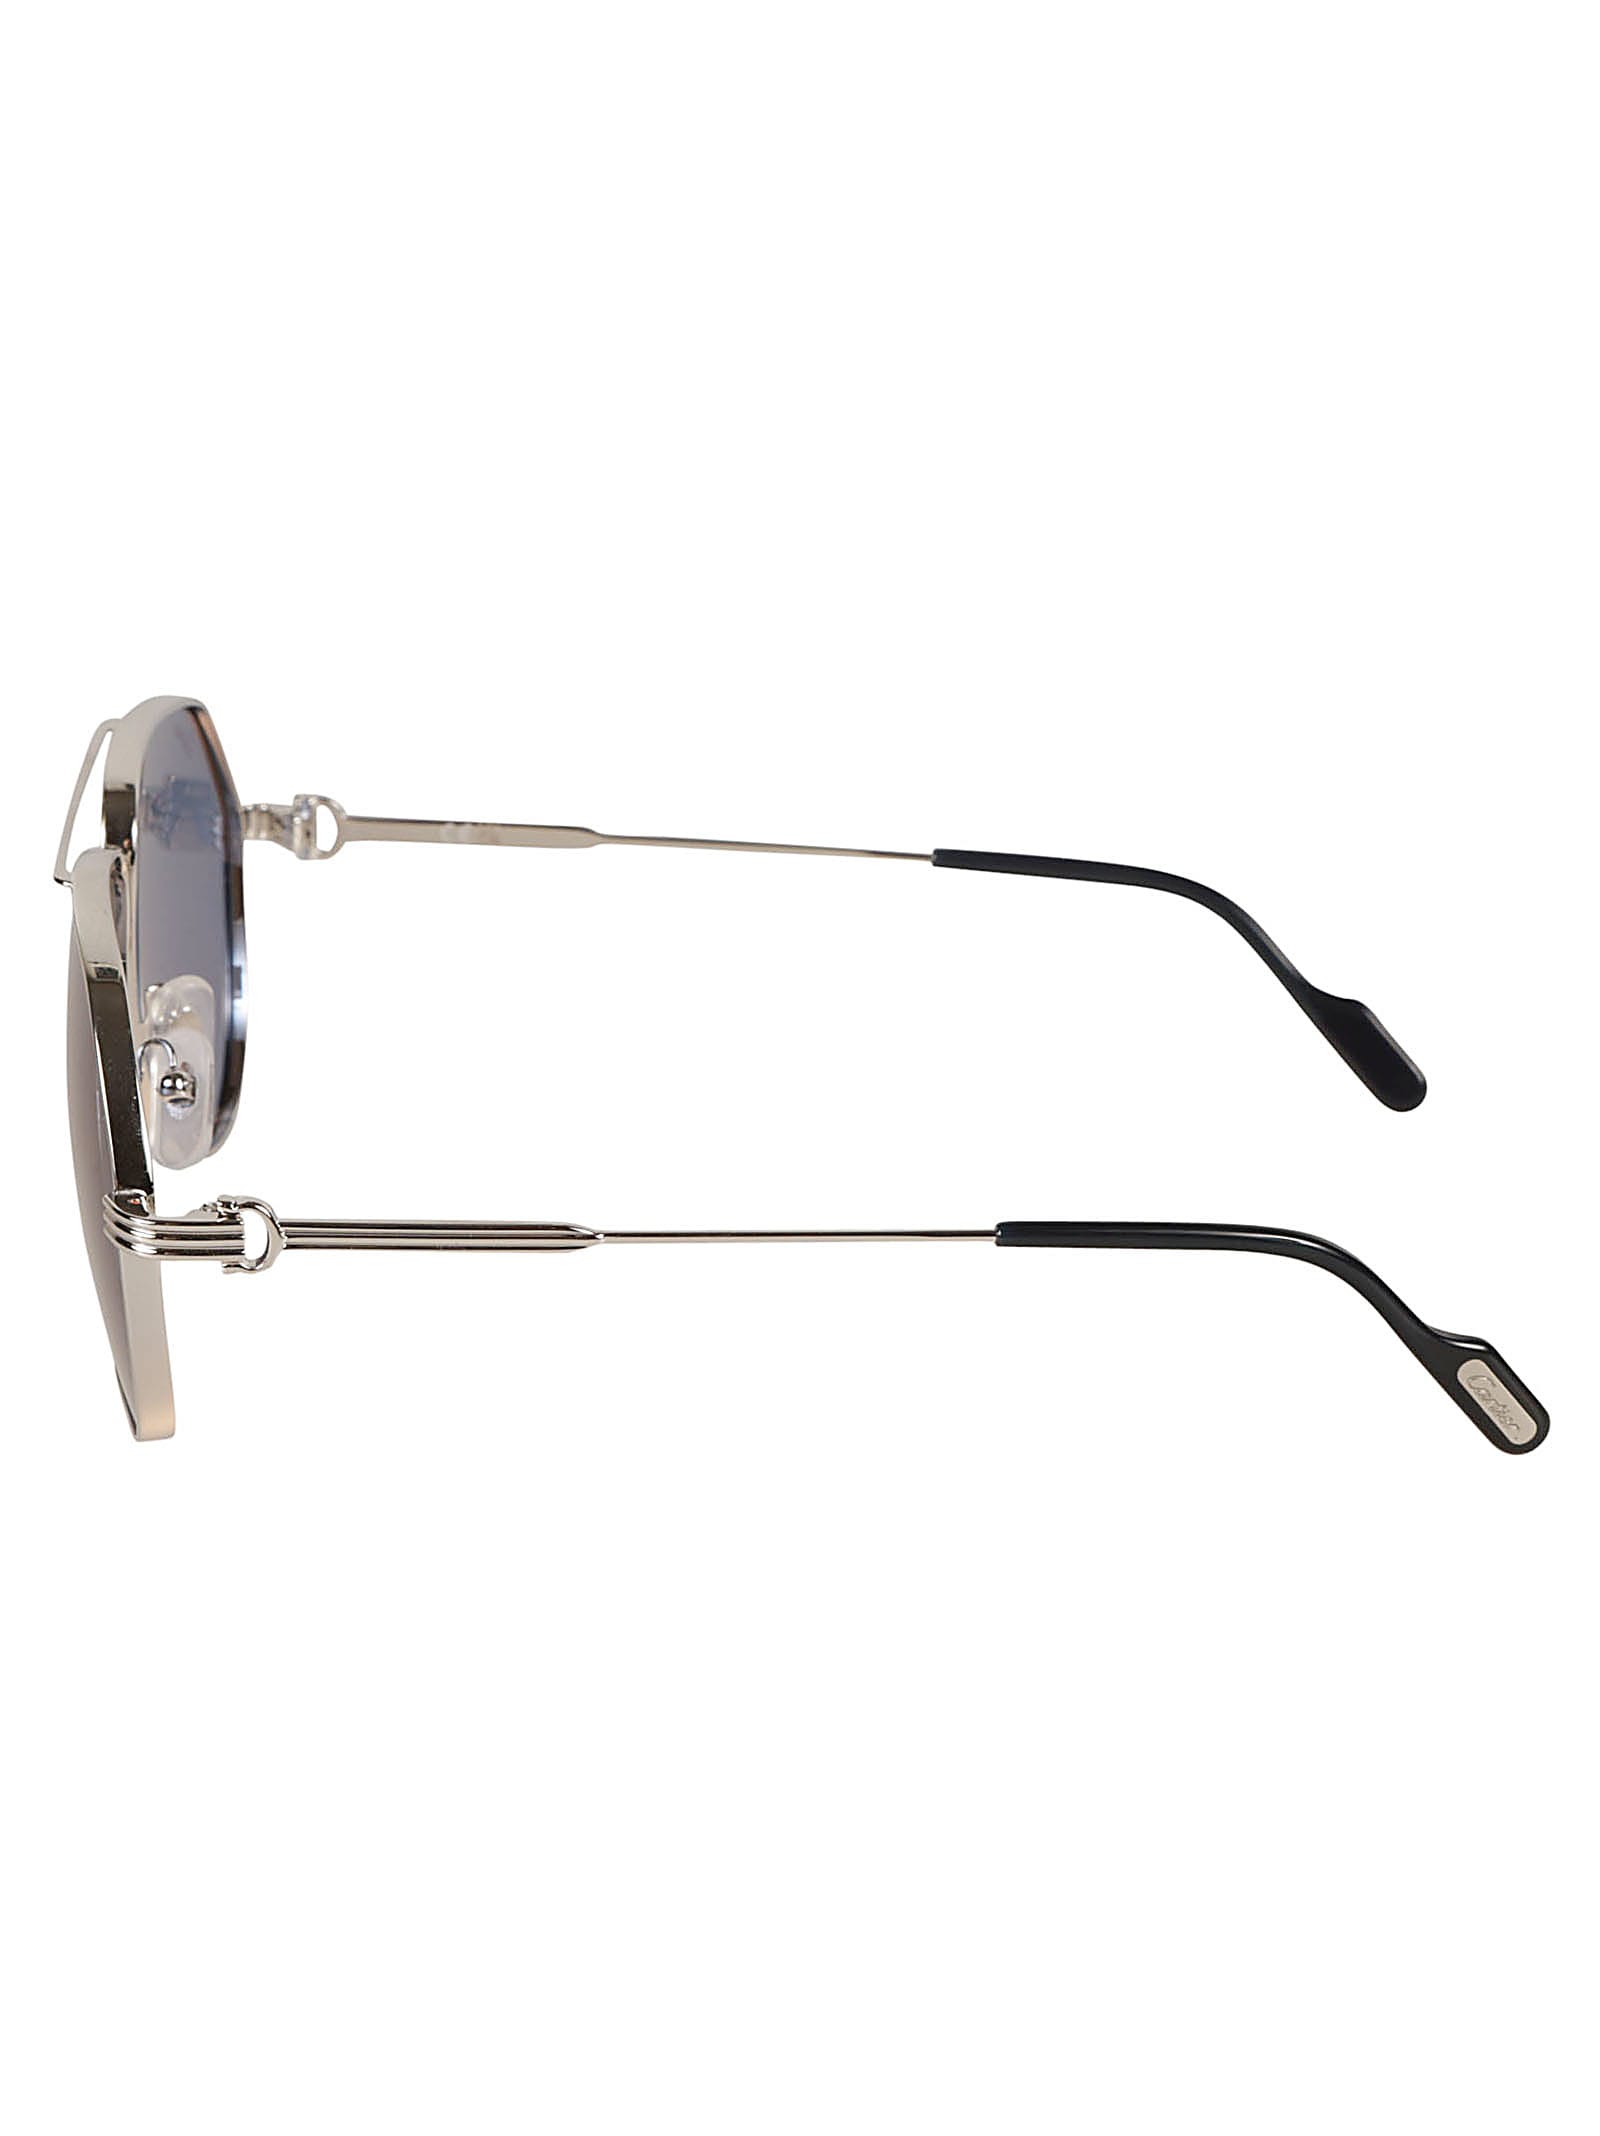 Shop Cartier Aviator Classic Sunglasses Sunglasses In Silver